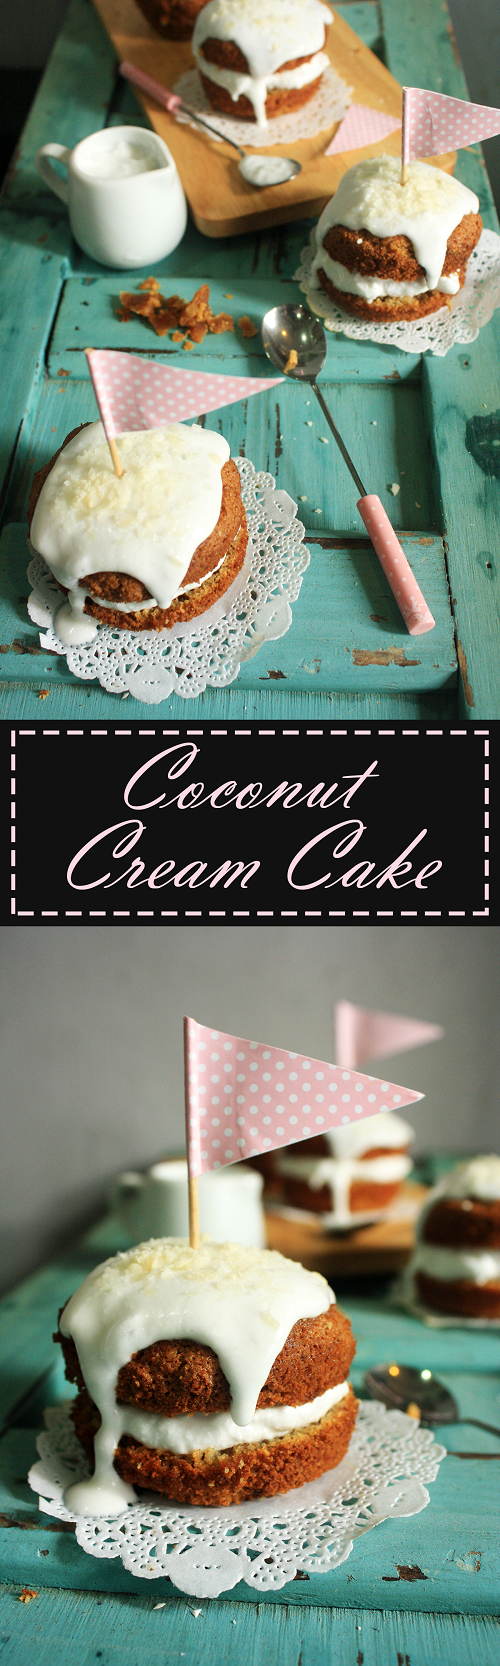 Coconut Cream Cake Recipe by Summer Day Naturals